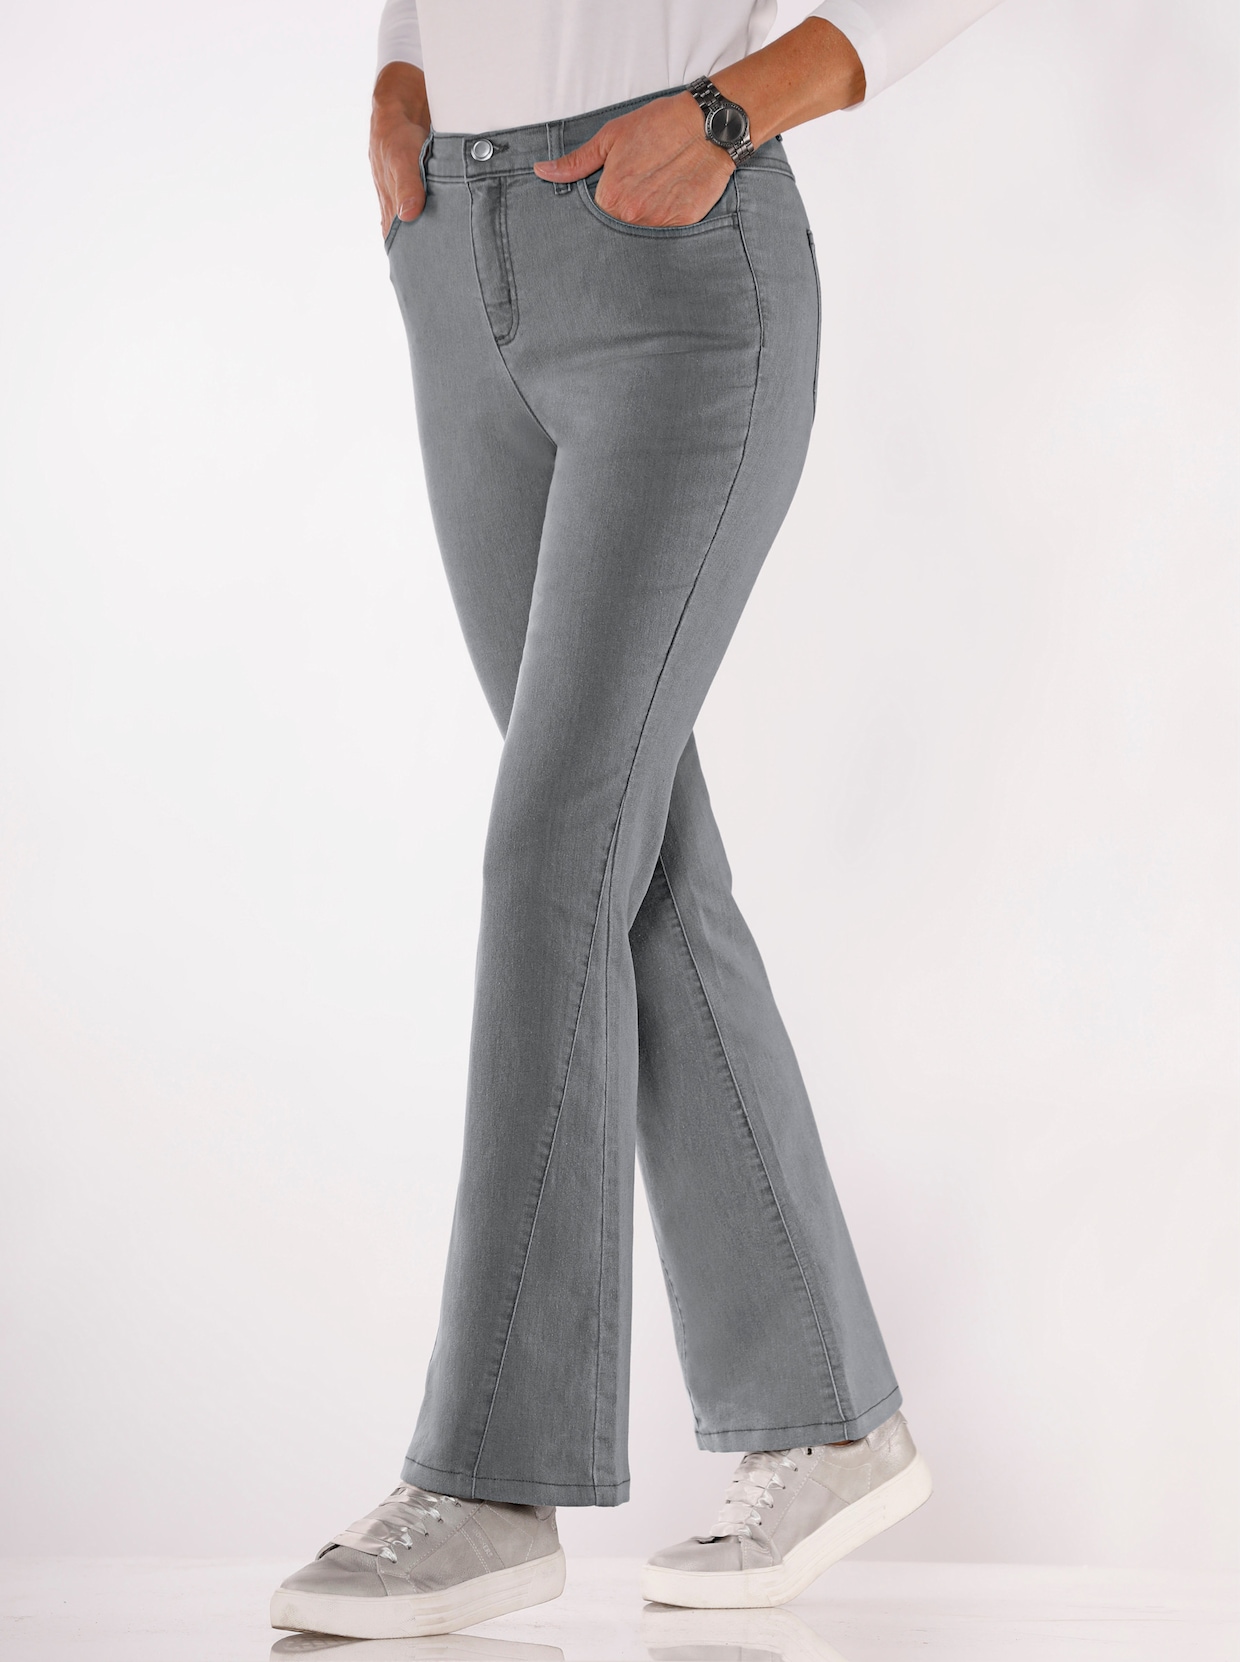 Jeans - light grey-denim